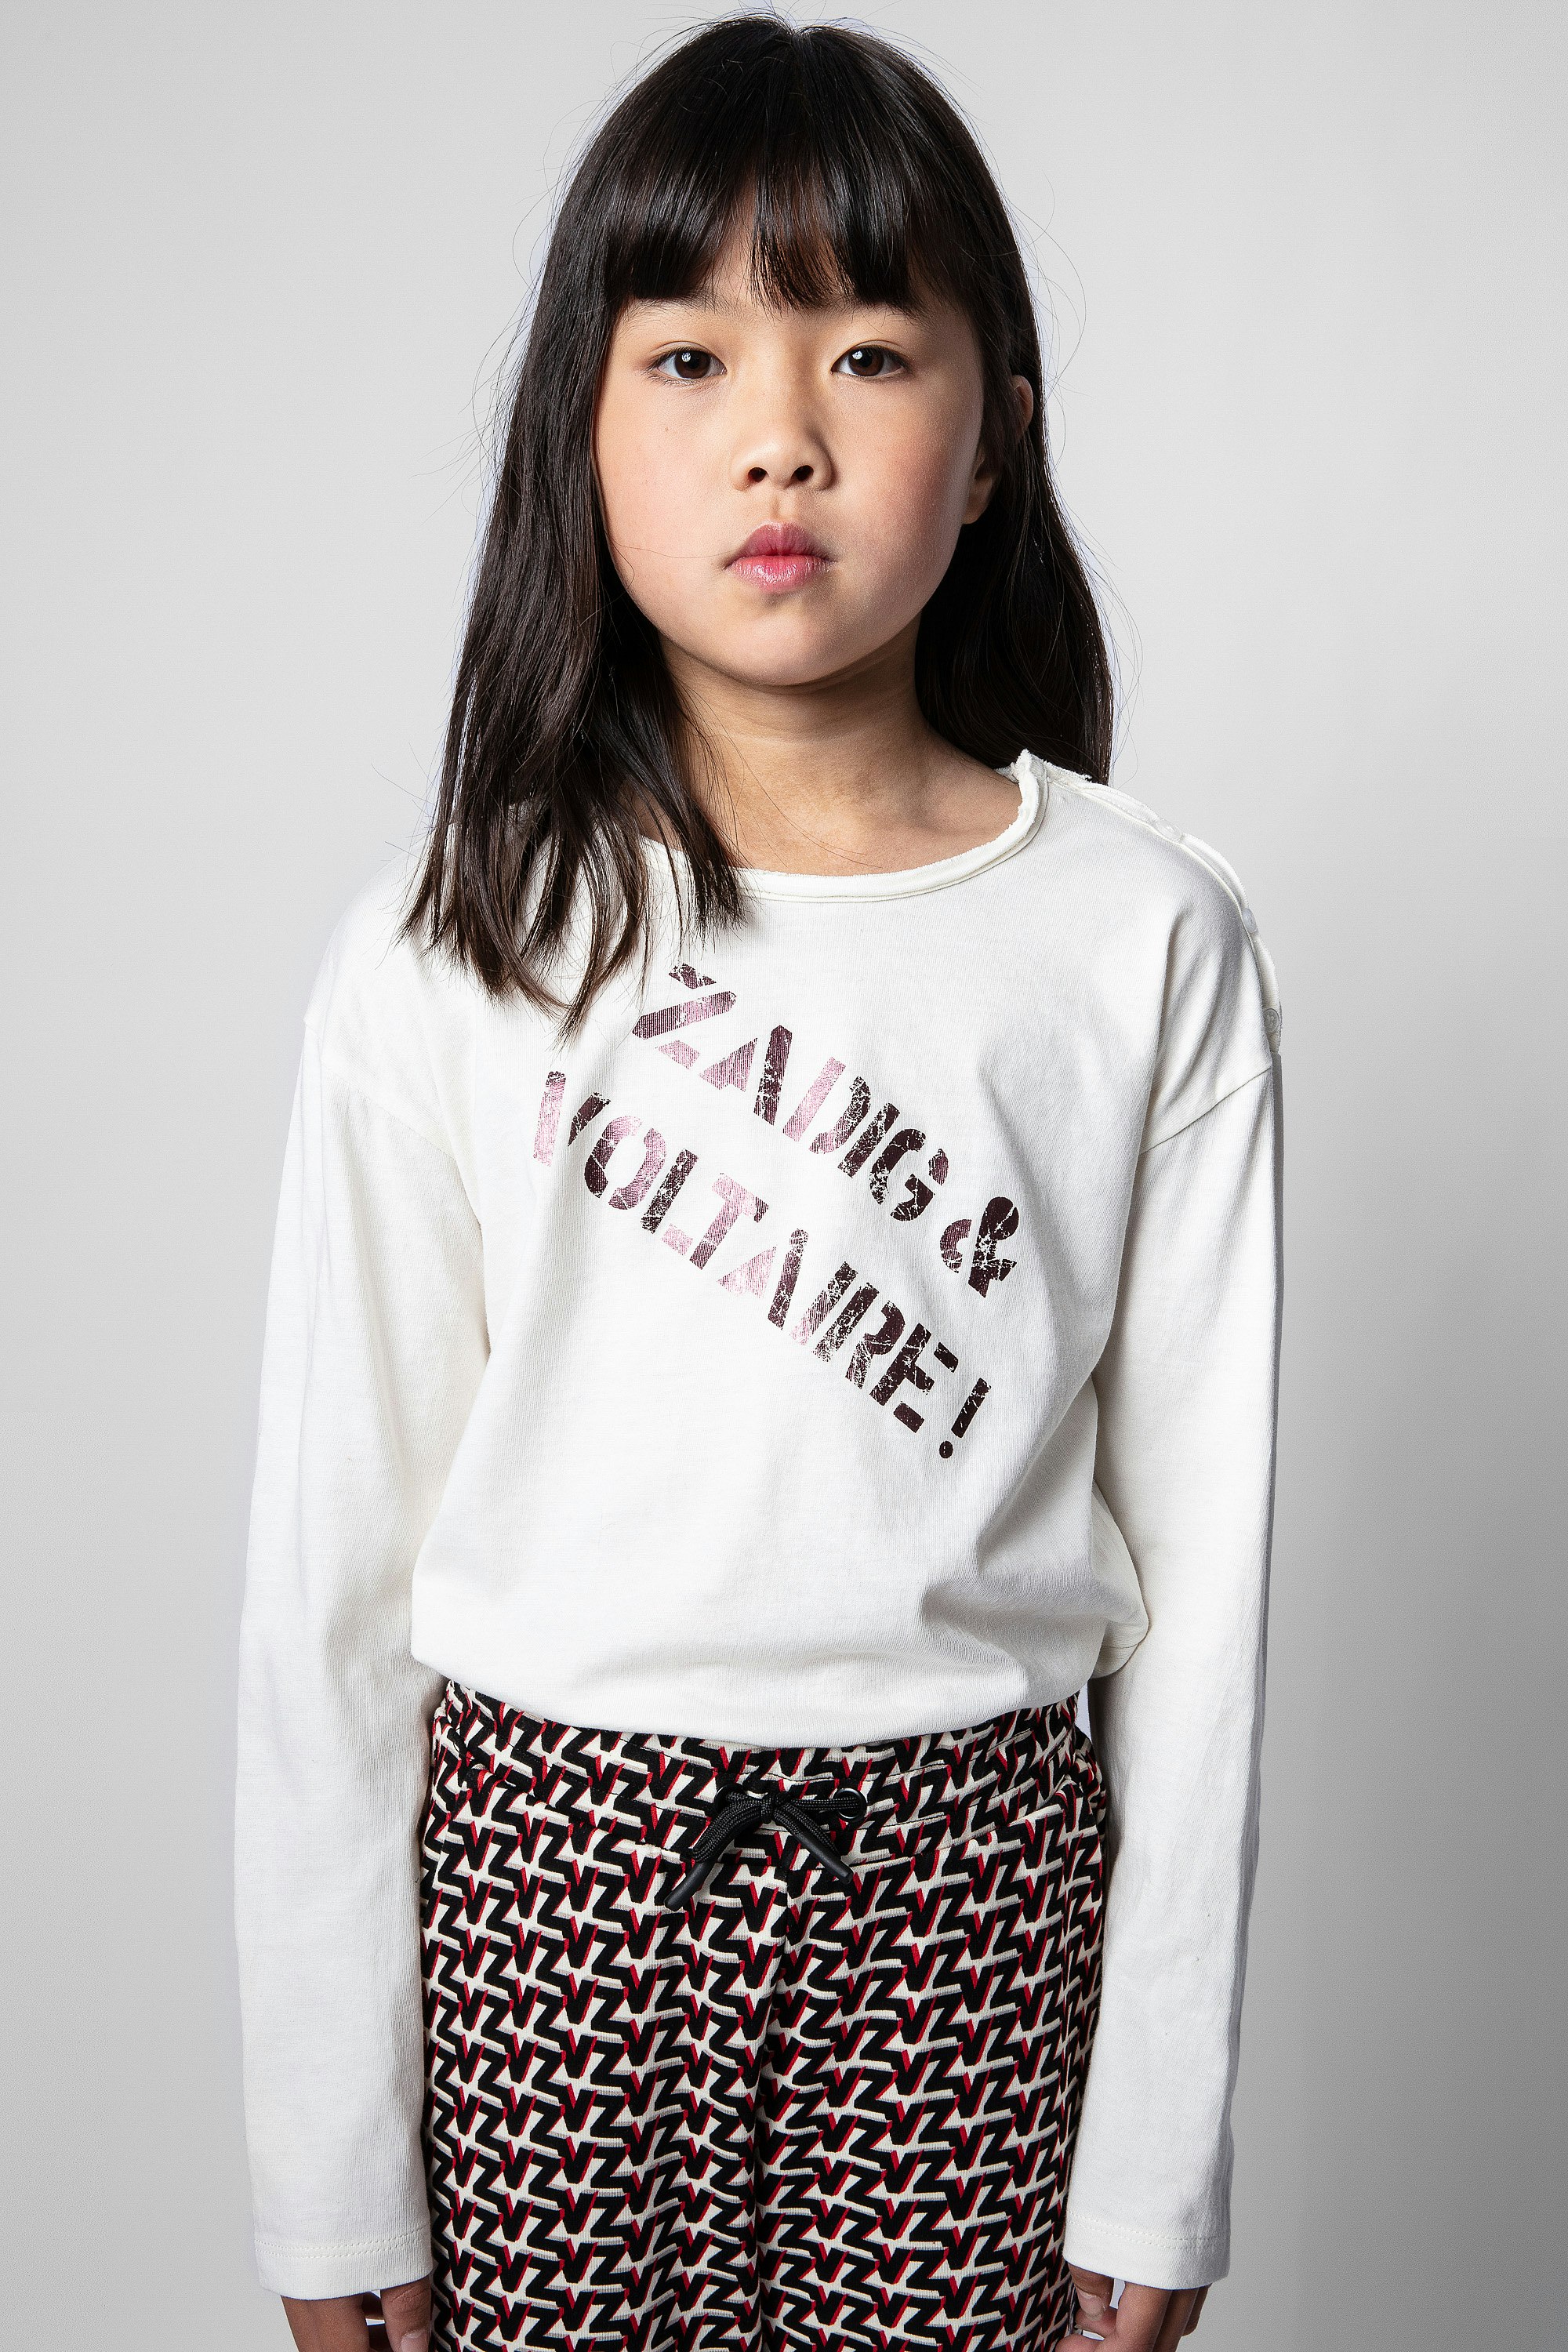 Anie Enfant T-shirt 